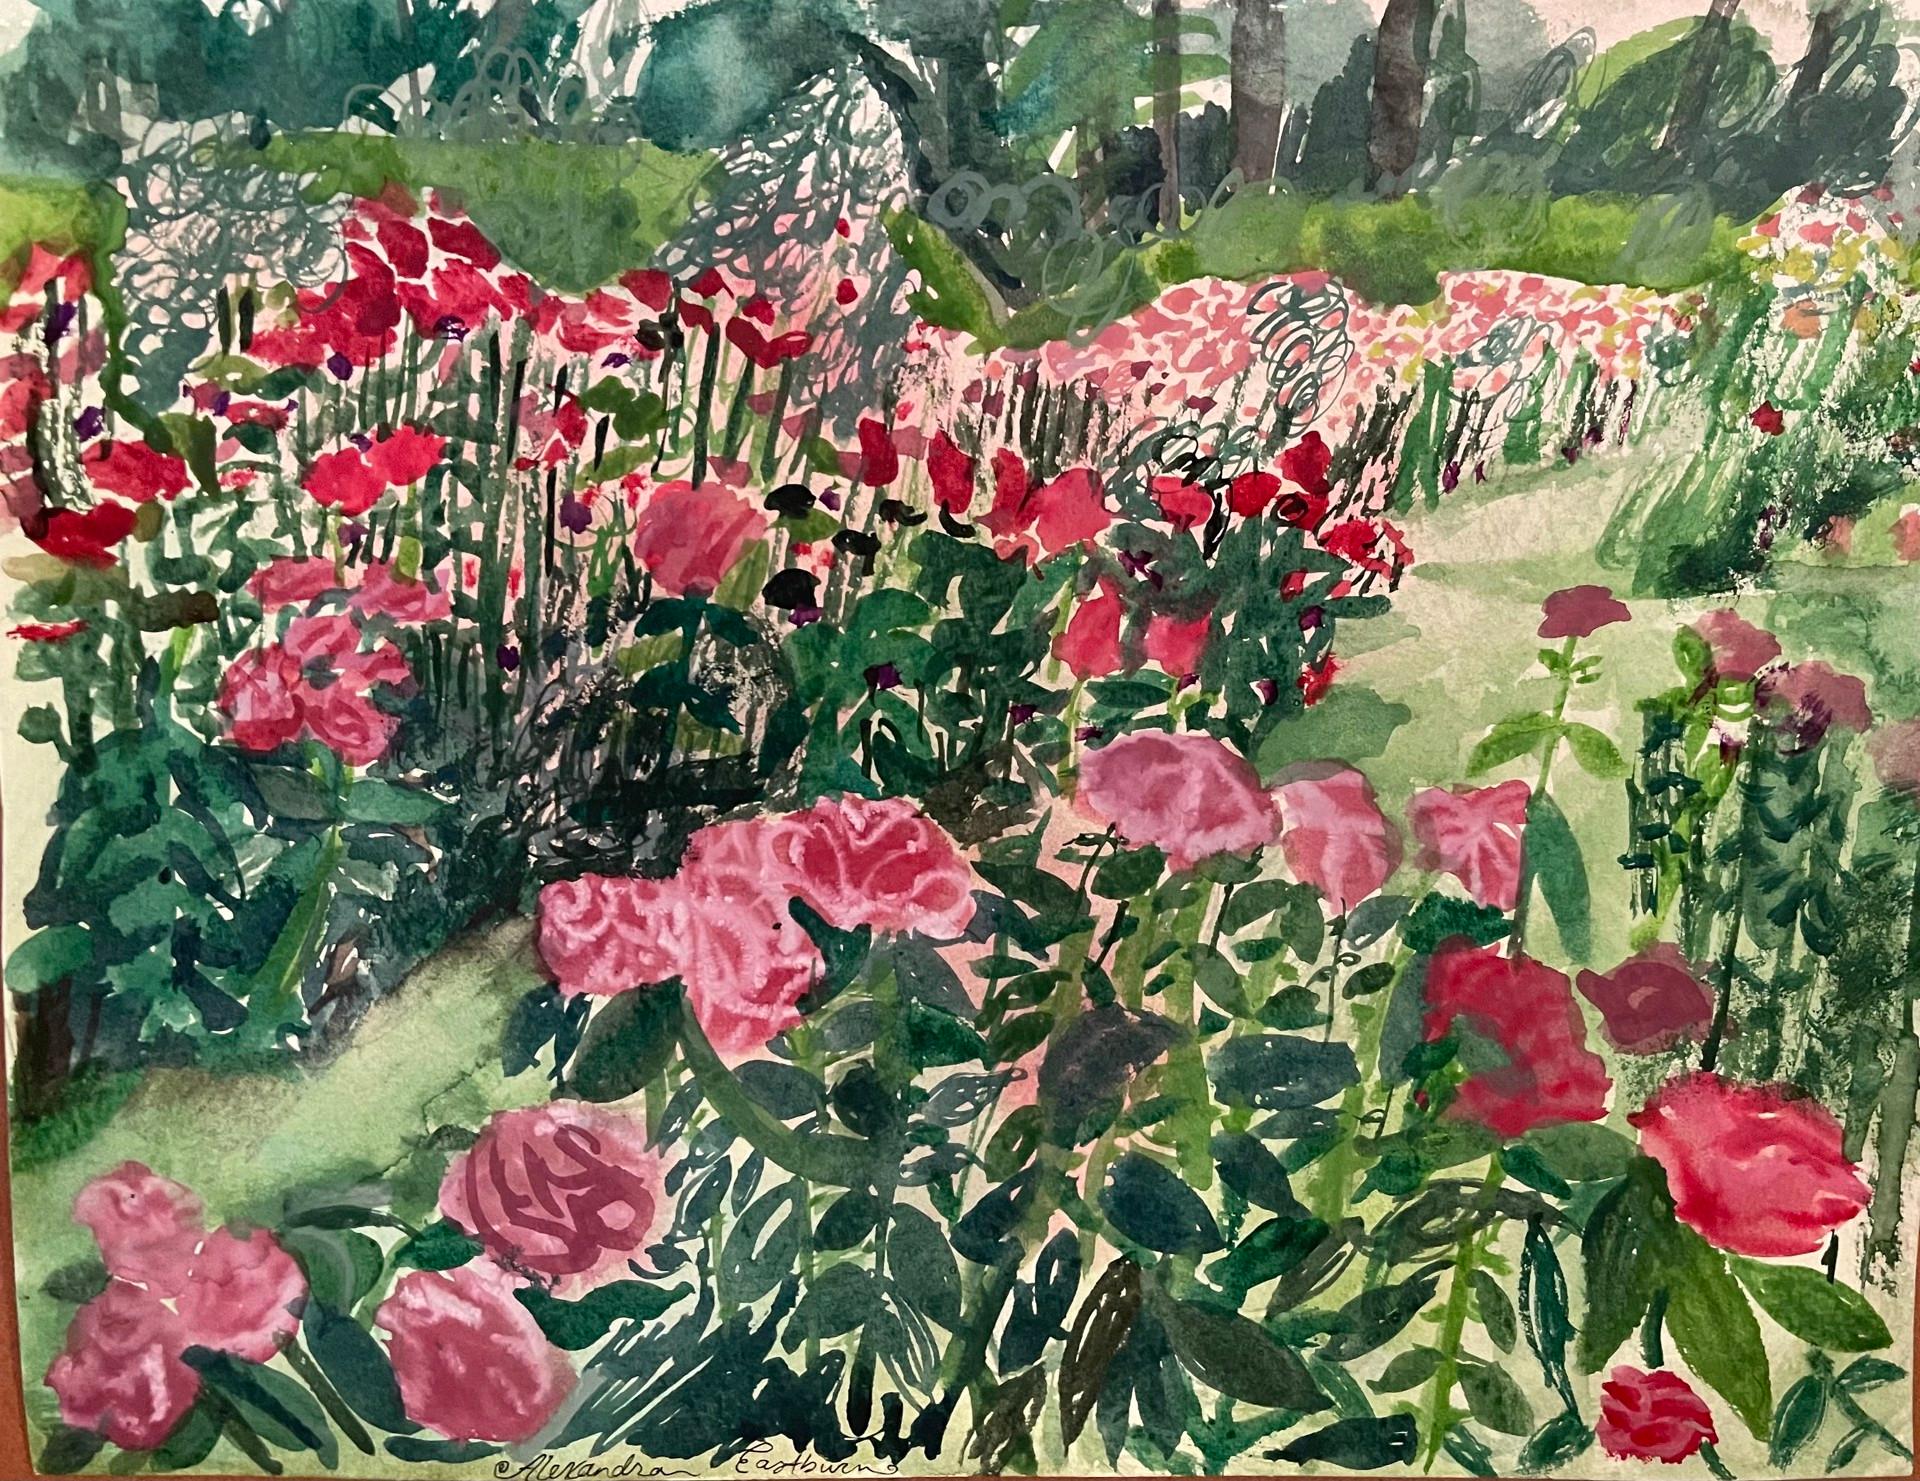 Alexandra Eastburn Landscape Painting - Portland Rose Garden Study,  botanical, watercolor painting, roses, pink & red